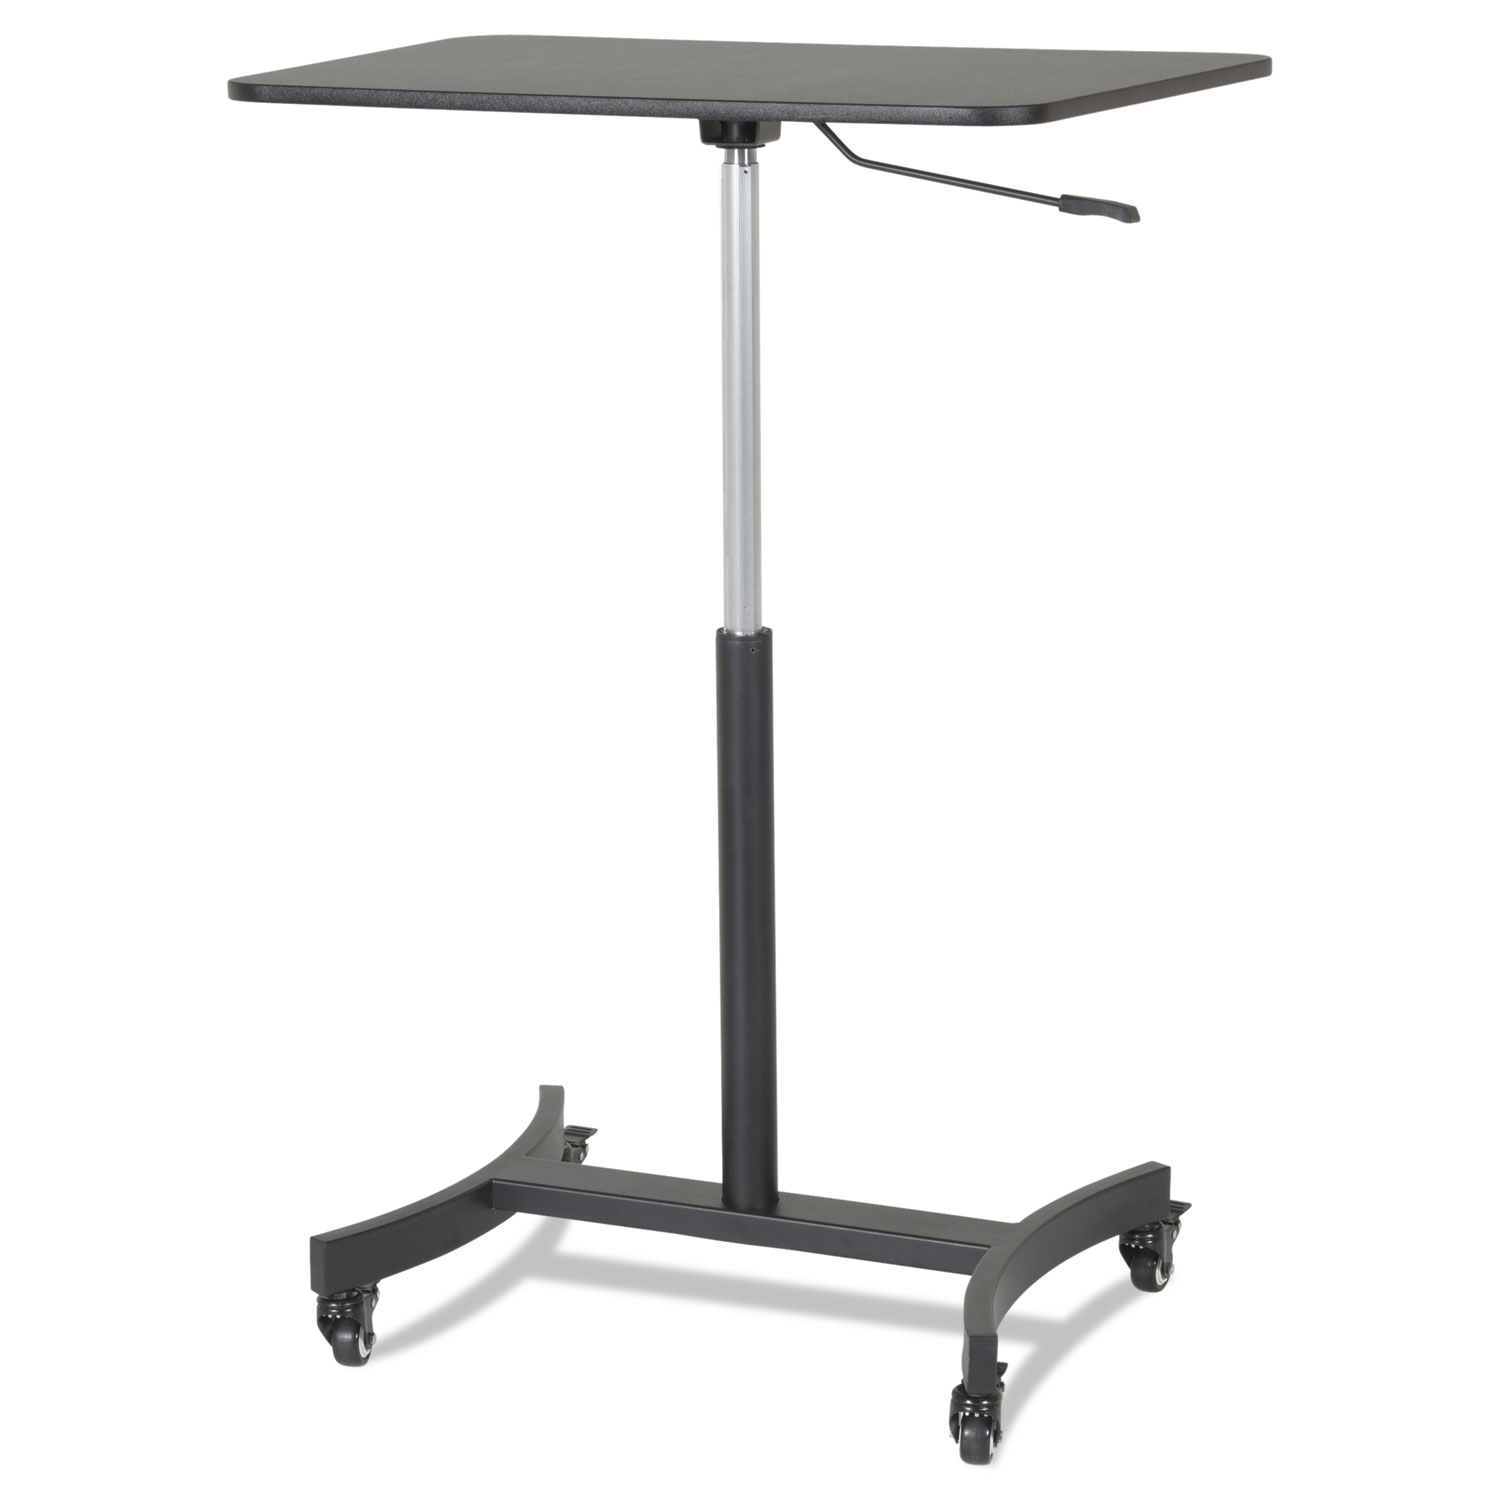 High Rise Mobile Adjustable Sit-Stand Workstation, 30 3/4 x 22 x 44, Black